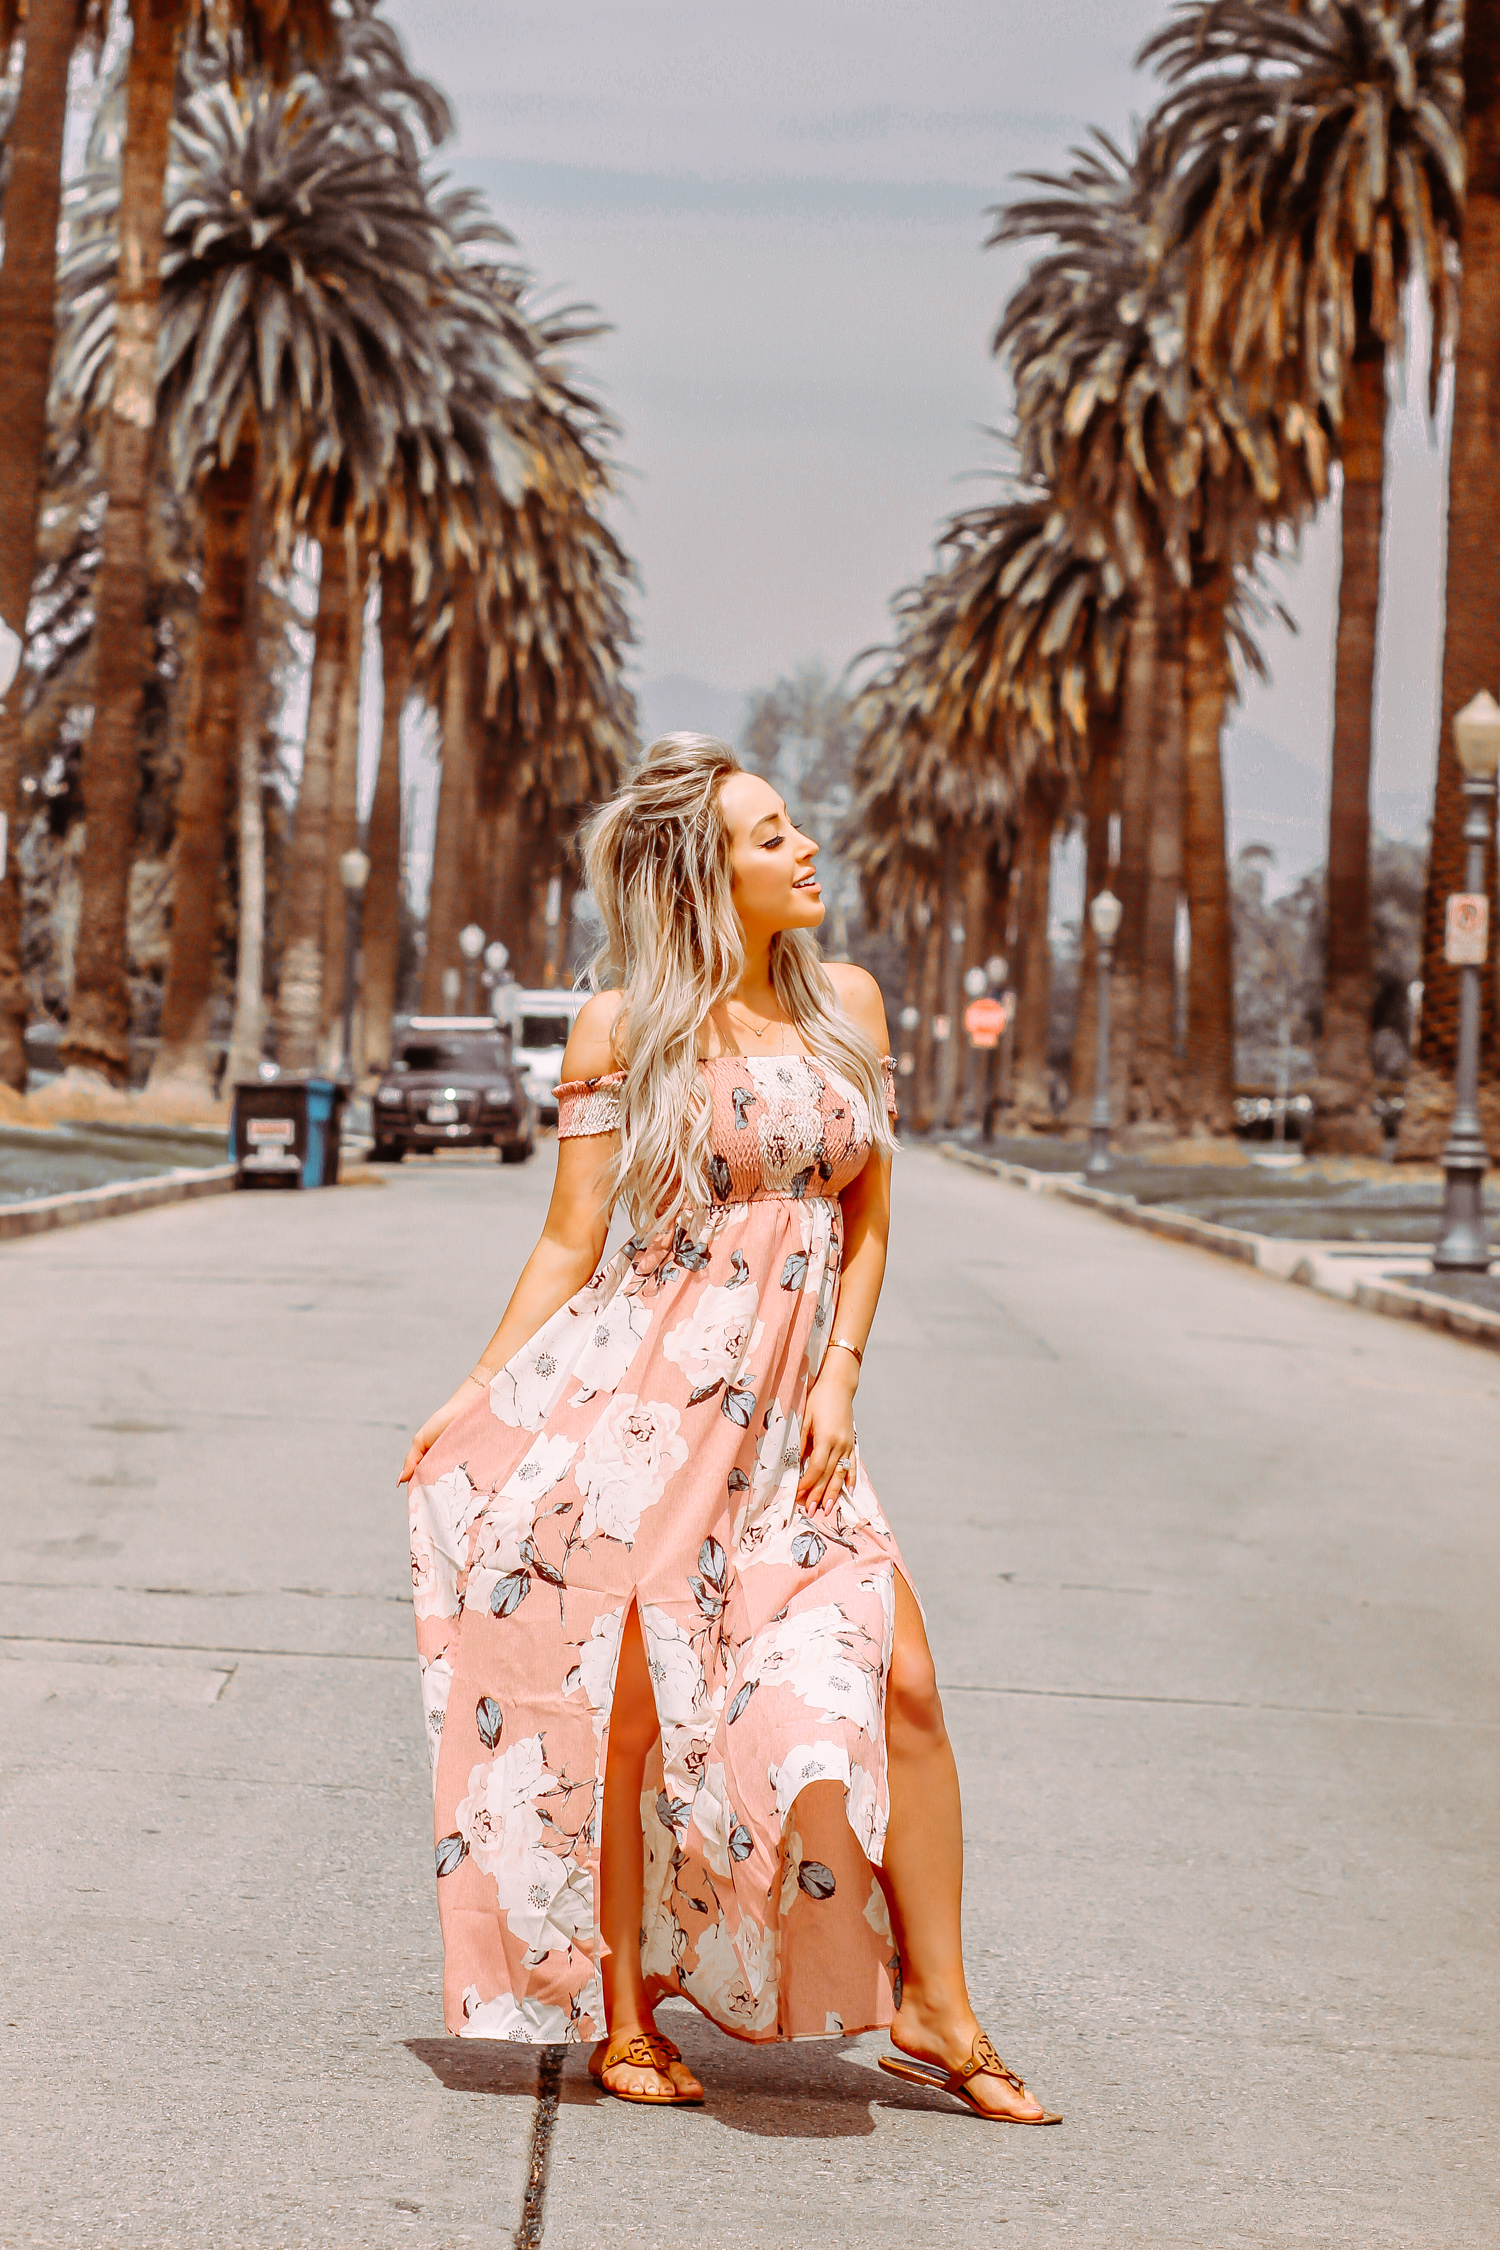 Let's Dress Shop | Spring & Summer Wardrobe | Palm Trees | Blondie in the City by Hayley Larue | @iloveshowpo